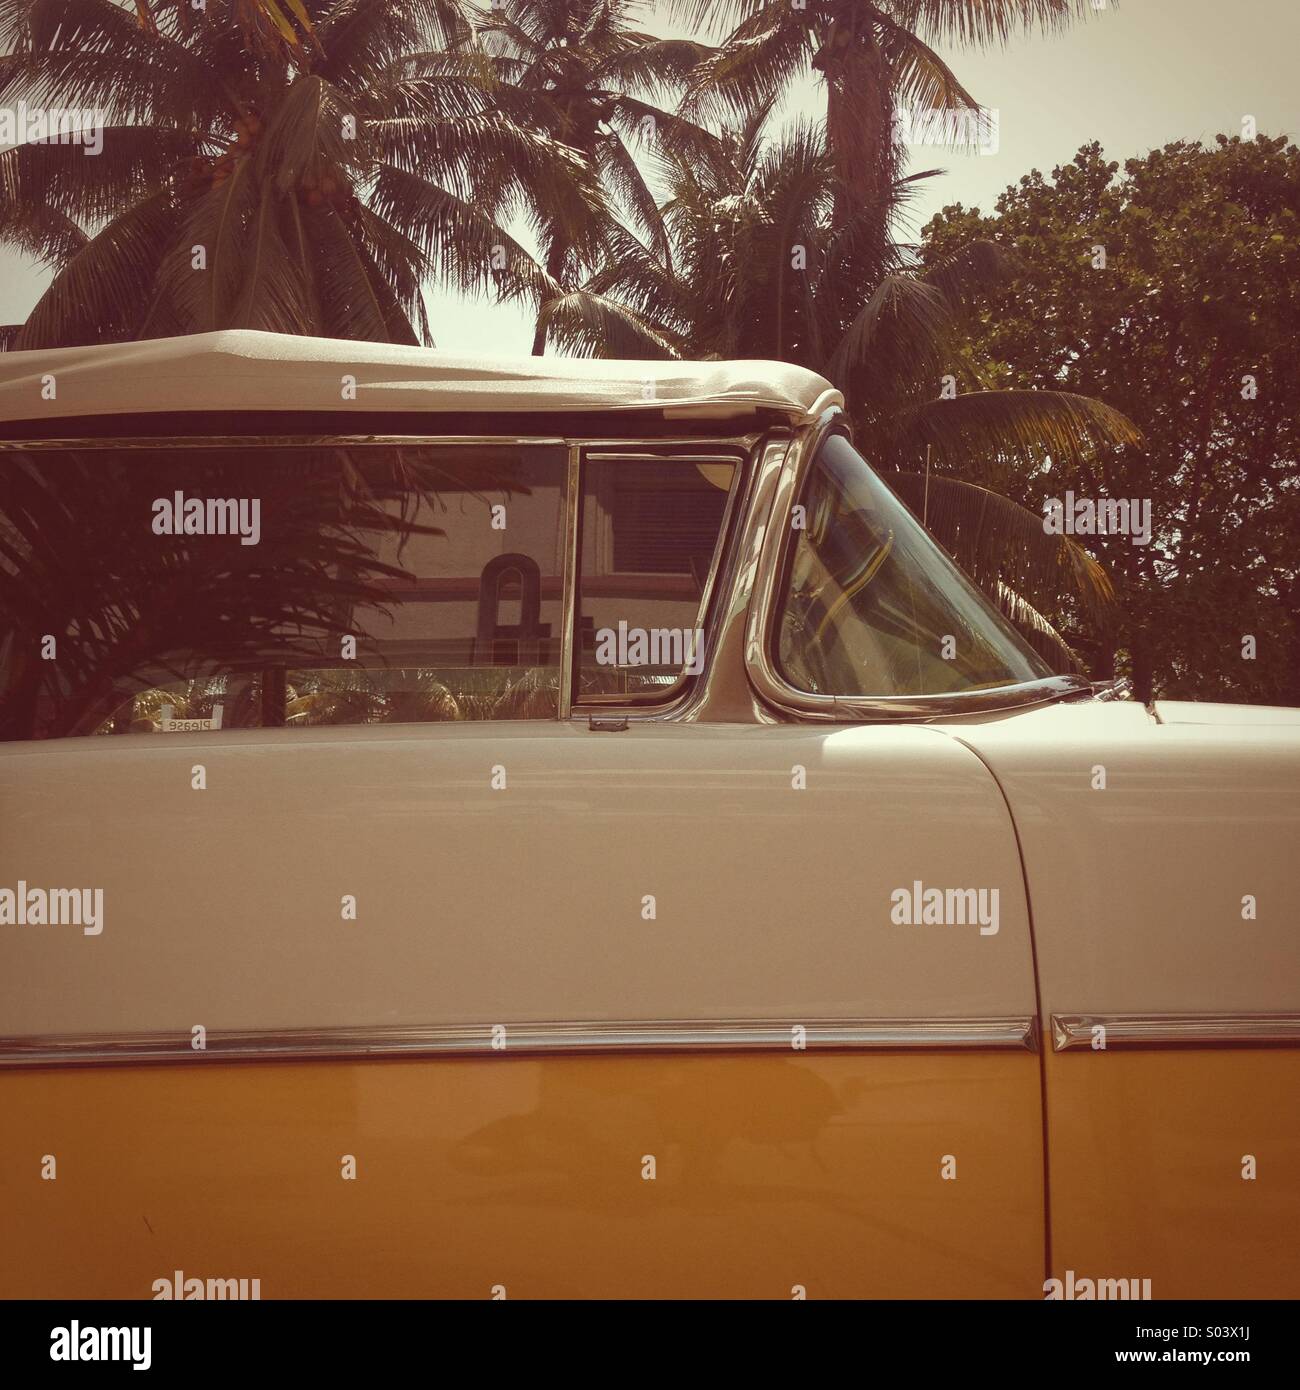 Chevrolet classic vintage American car in South beach, Miami, America. Stock Photo